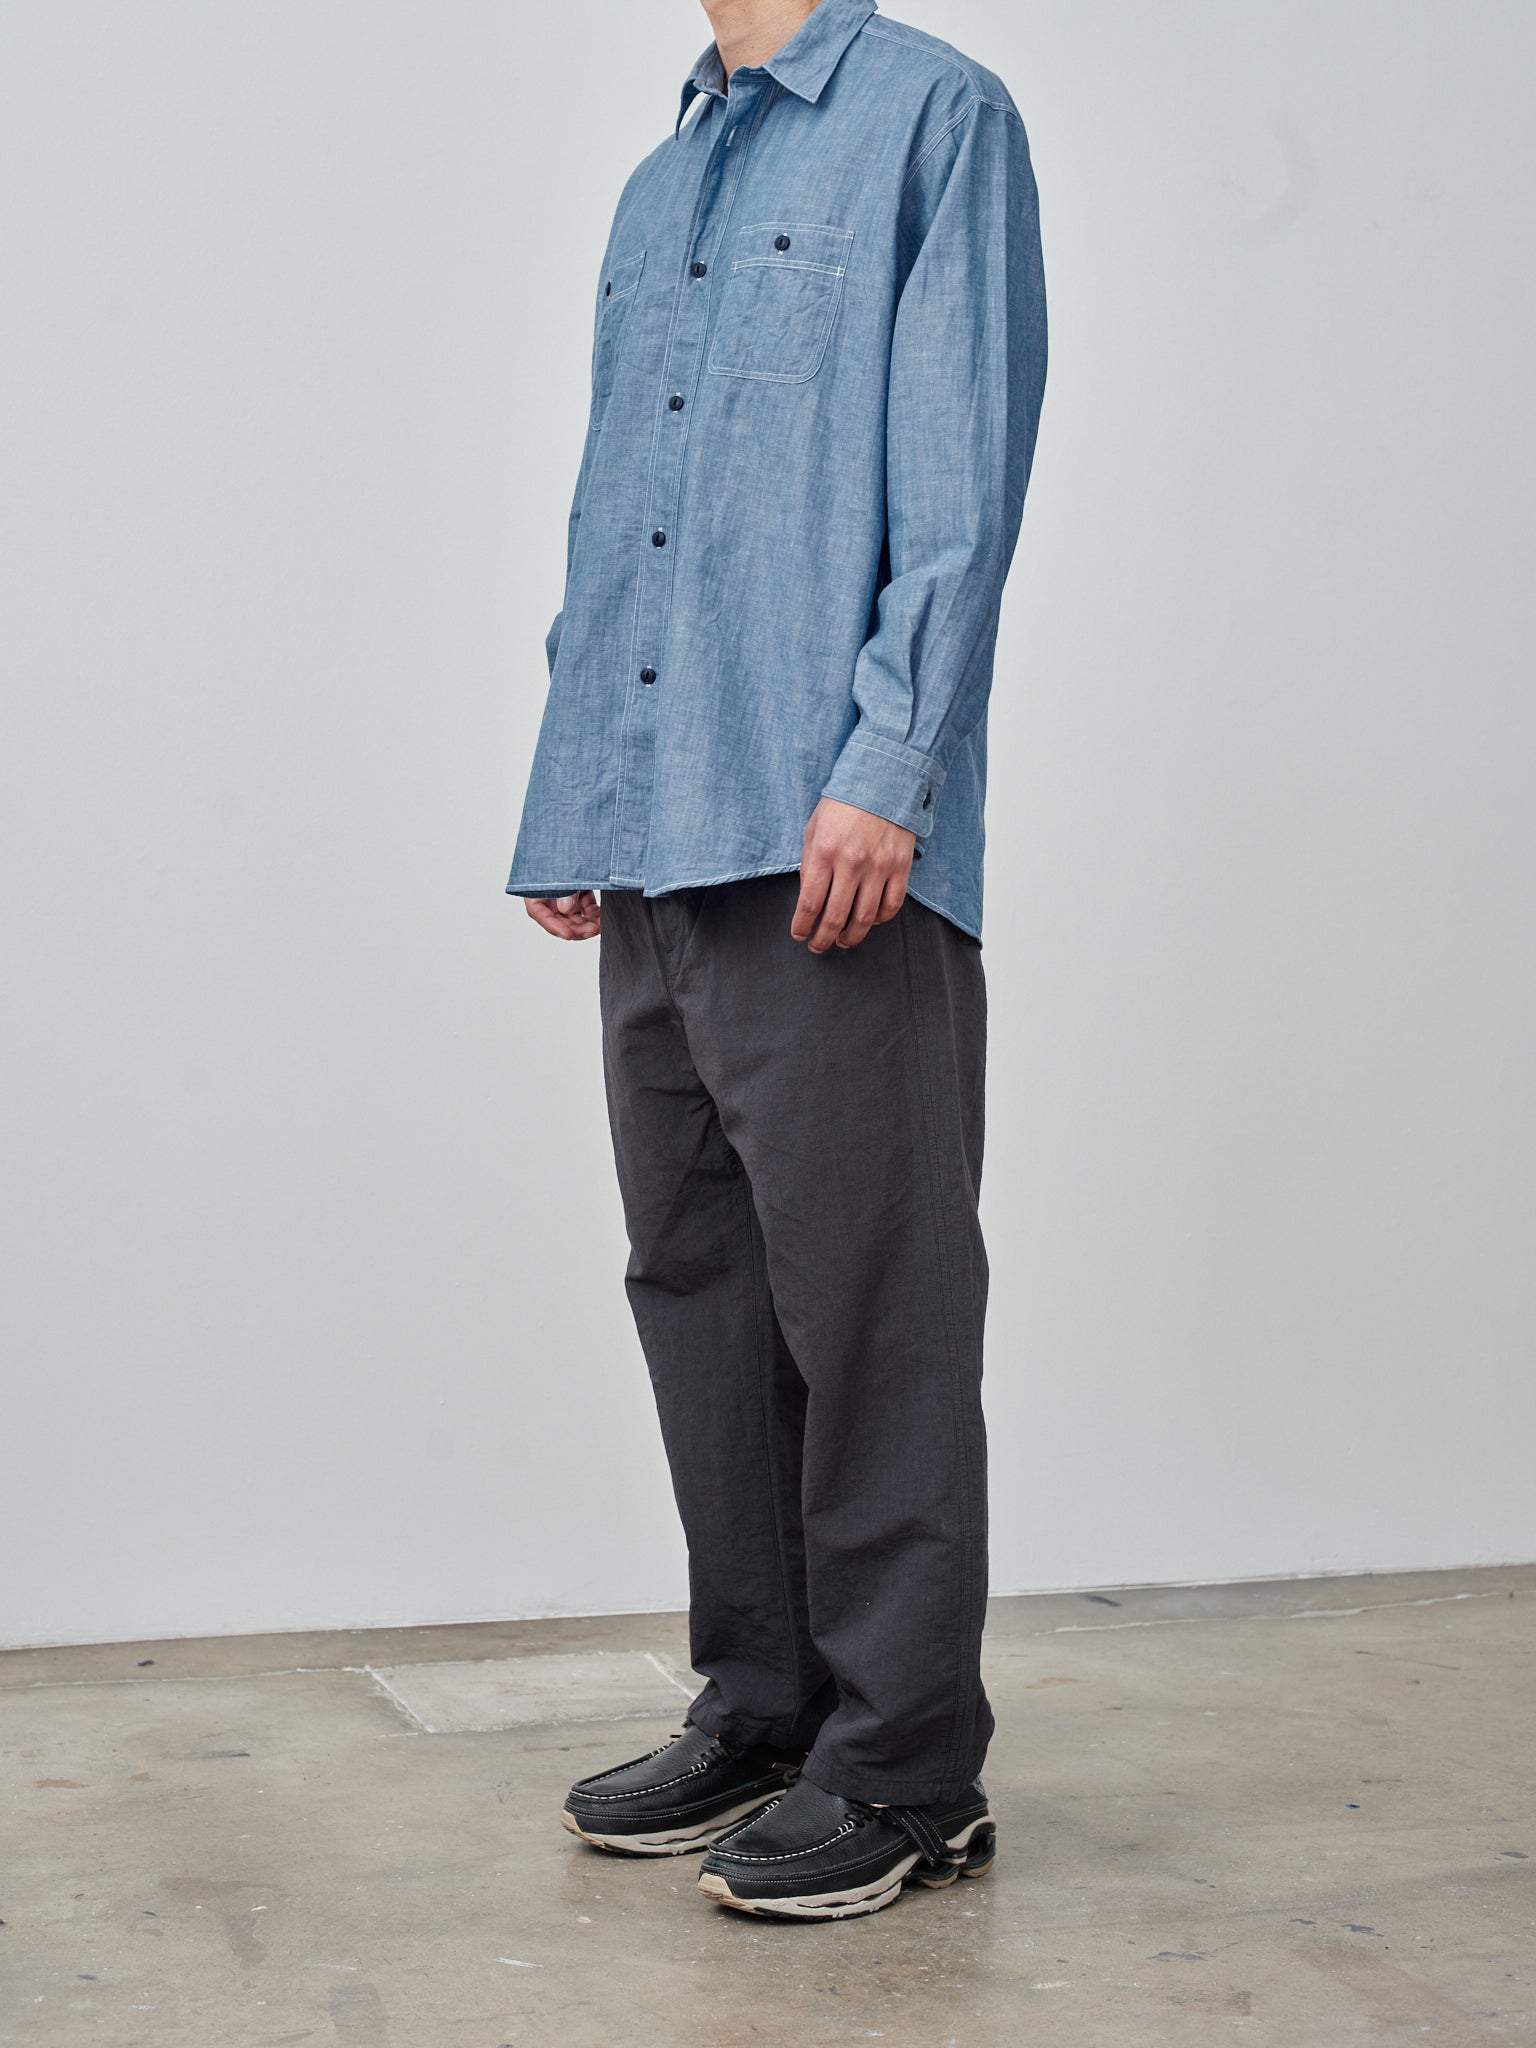 Namu Shop - Fujito B/S Work Shirt - Blue Chambray